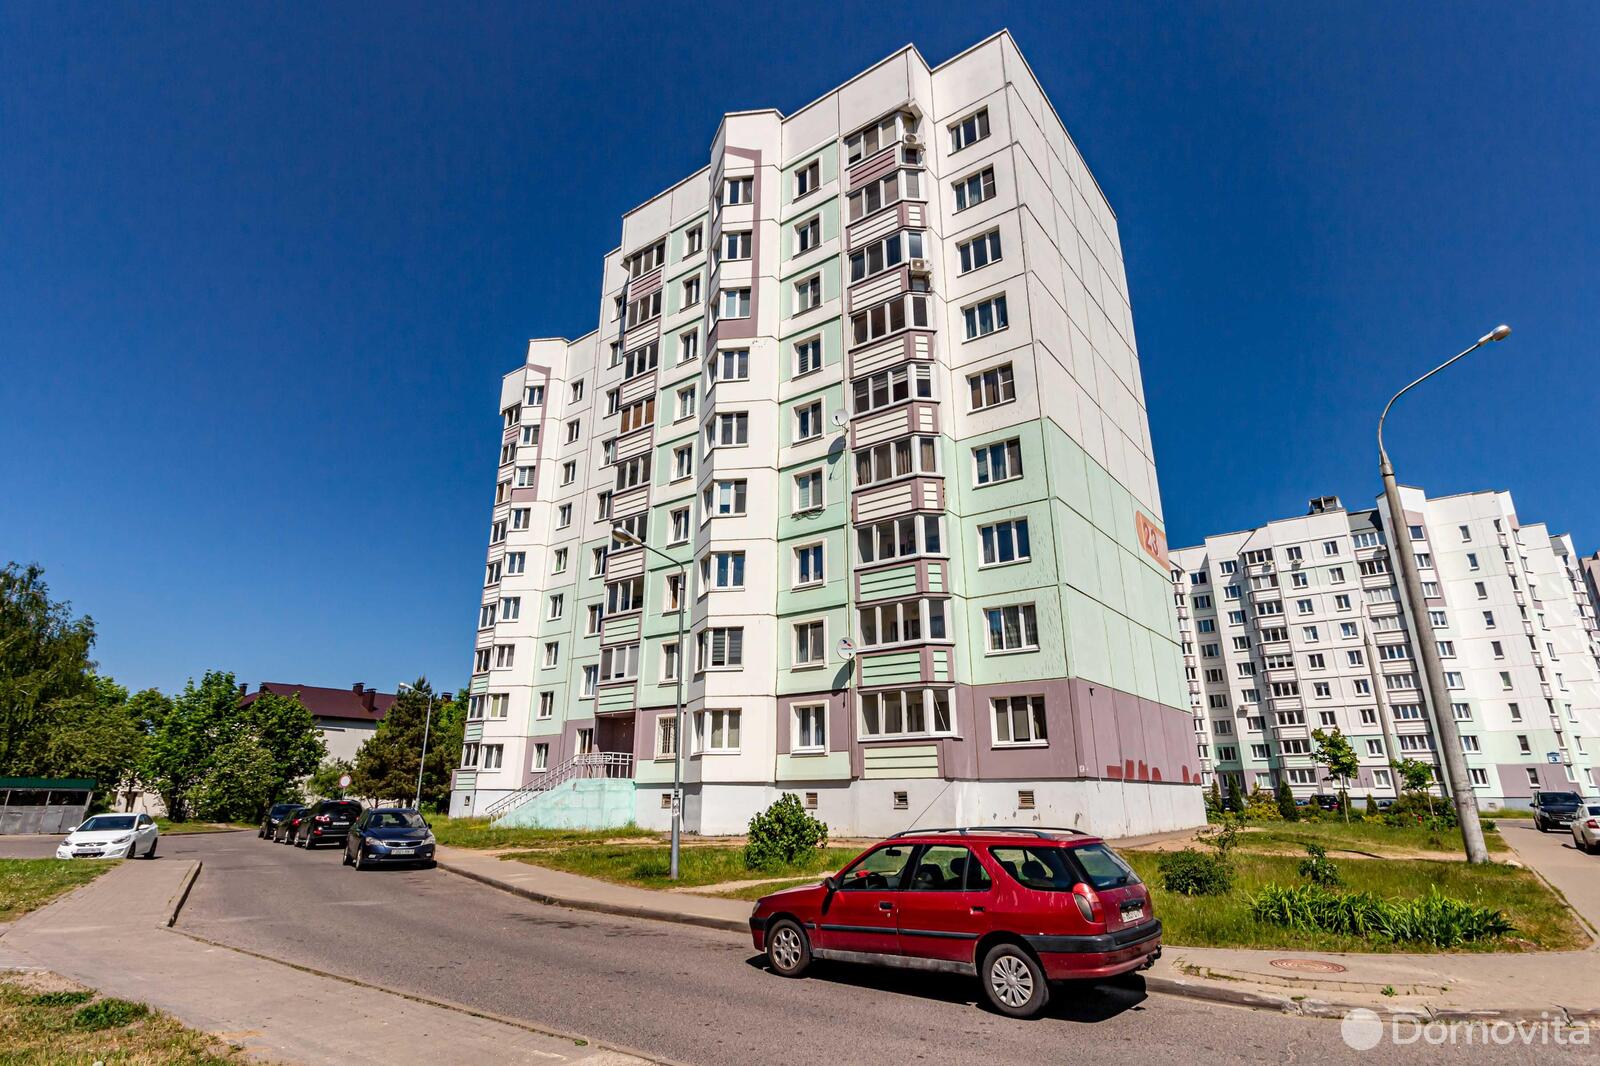 квартира, Минск, ул. Киреева, д. 23, стоимость продажи 139 778 р.